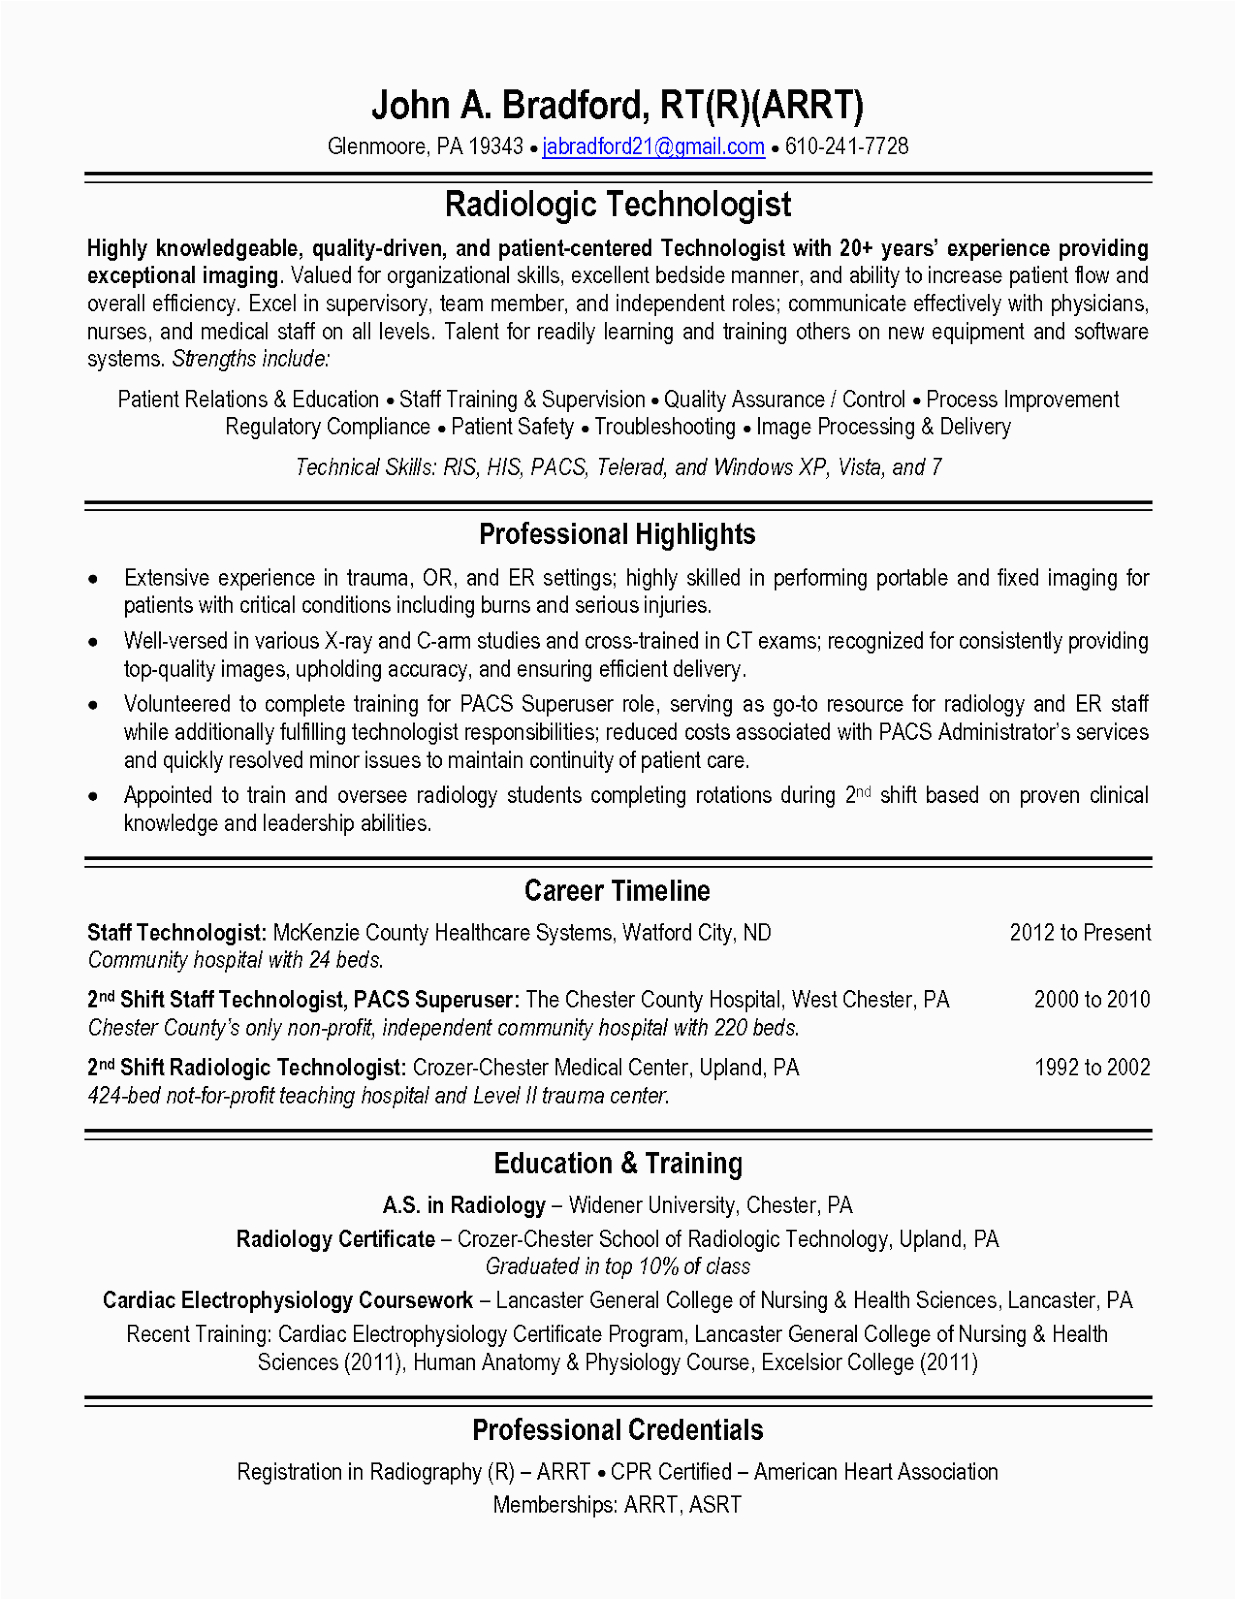 Resume Sample for Radiologic Technologist Fresh Graduate Entry Level X Ray Tech Resume